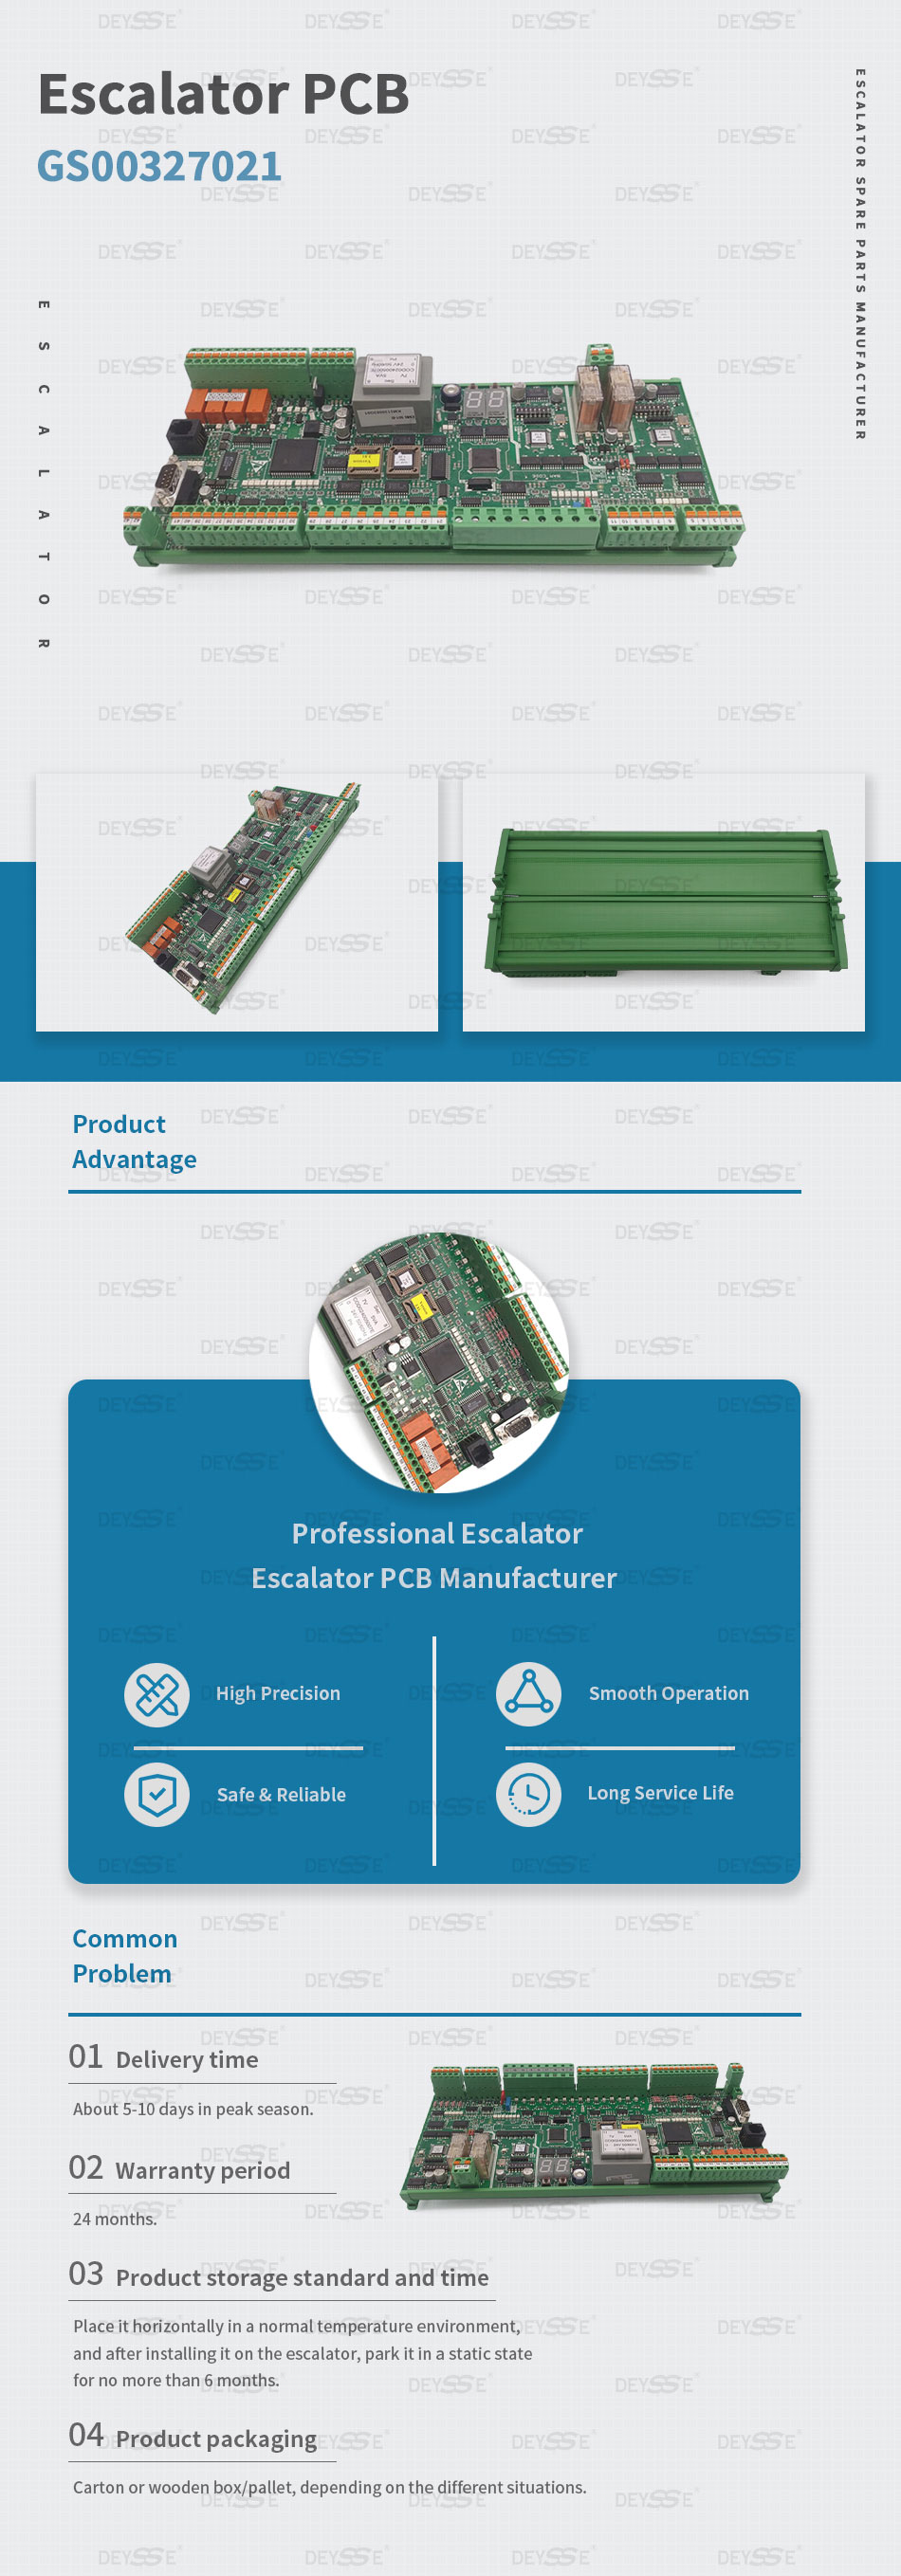 Escalator PCB KM51070342G01 Redesign EMB501 GS00327021